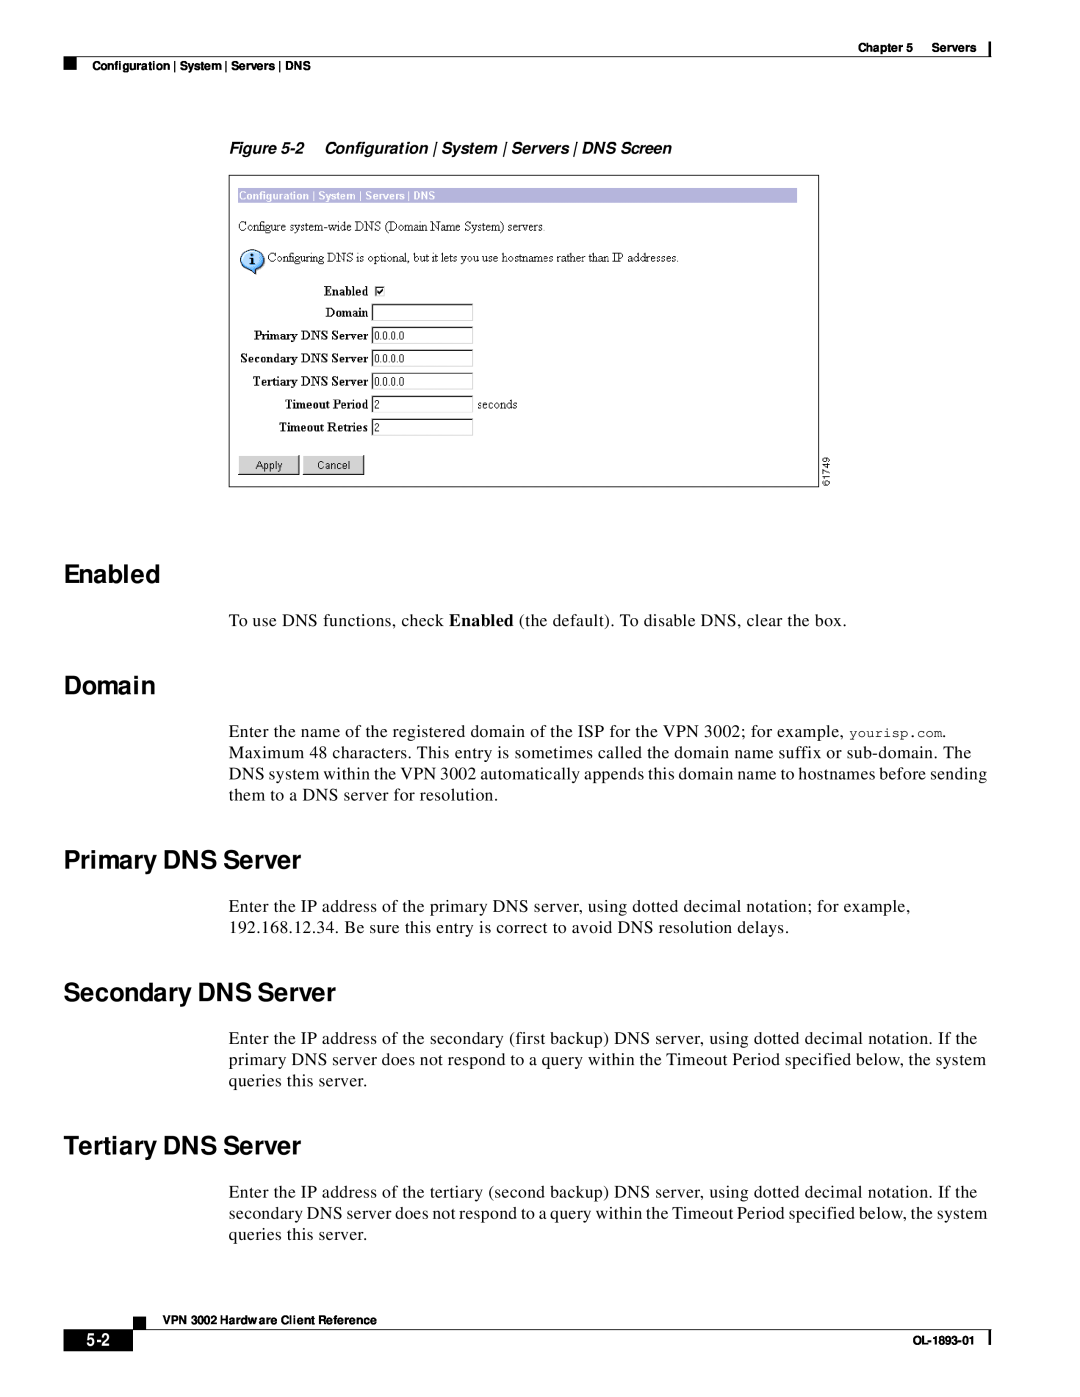 Cisco Systems VPN 3002 manual Enabled, Domain, Primary DNS Server, Secondary DNS Server, Tertiary DNS Server 